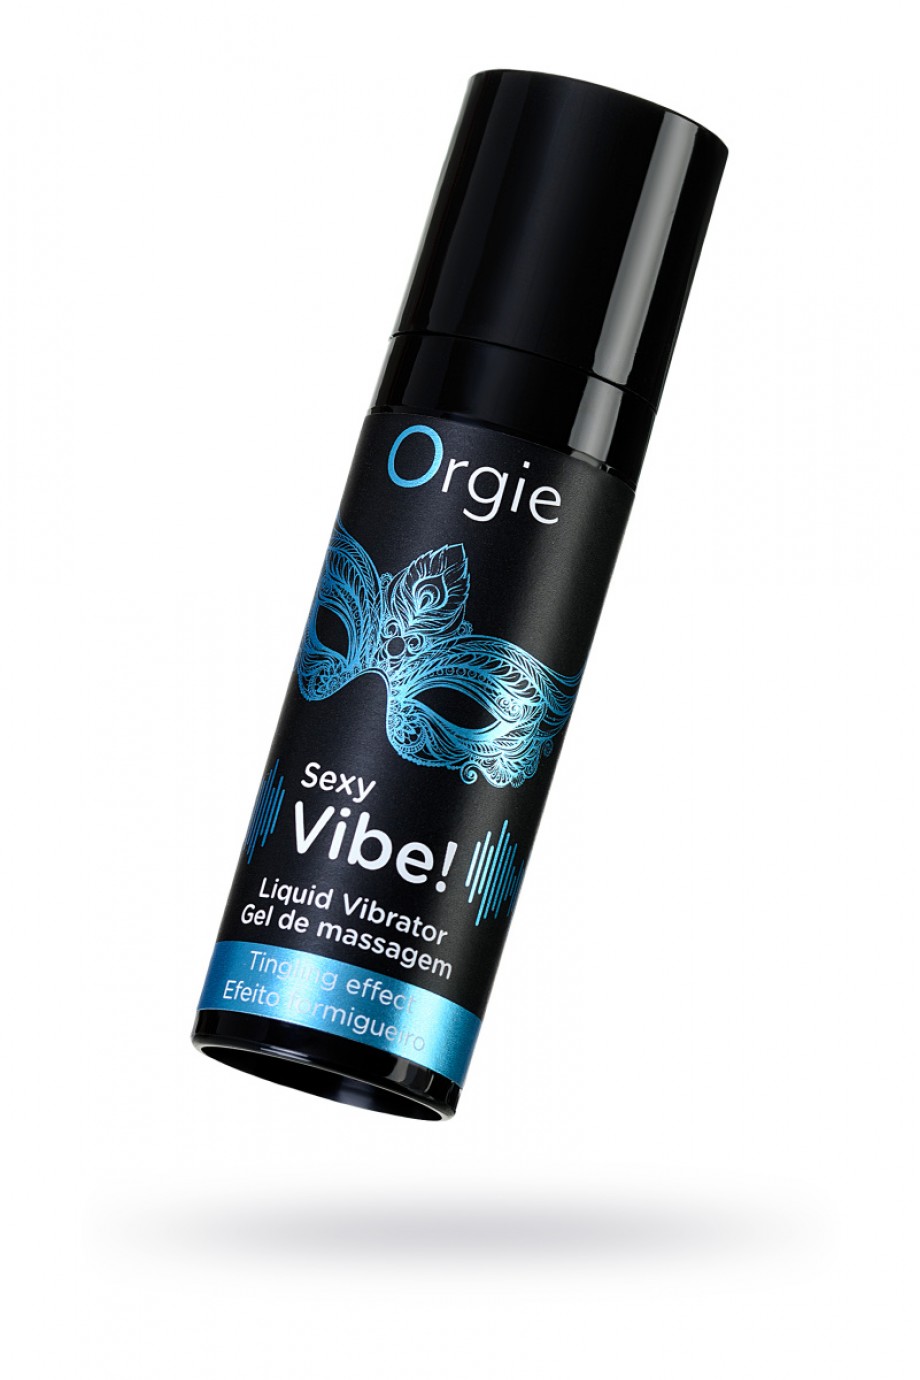 Orgie Sexy Vibe Liquid Vibrator с эффектом вибрации, 15 мл